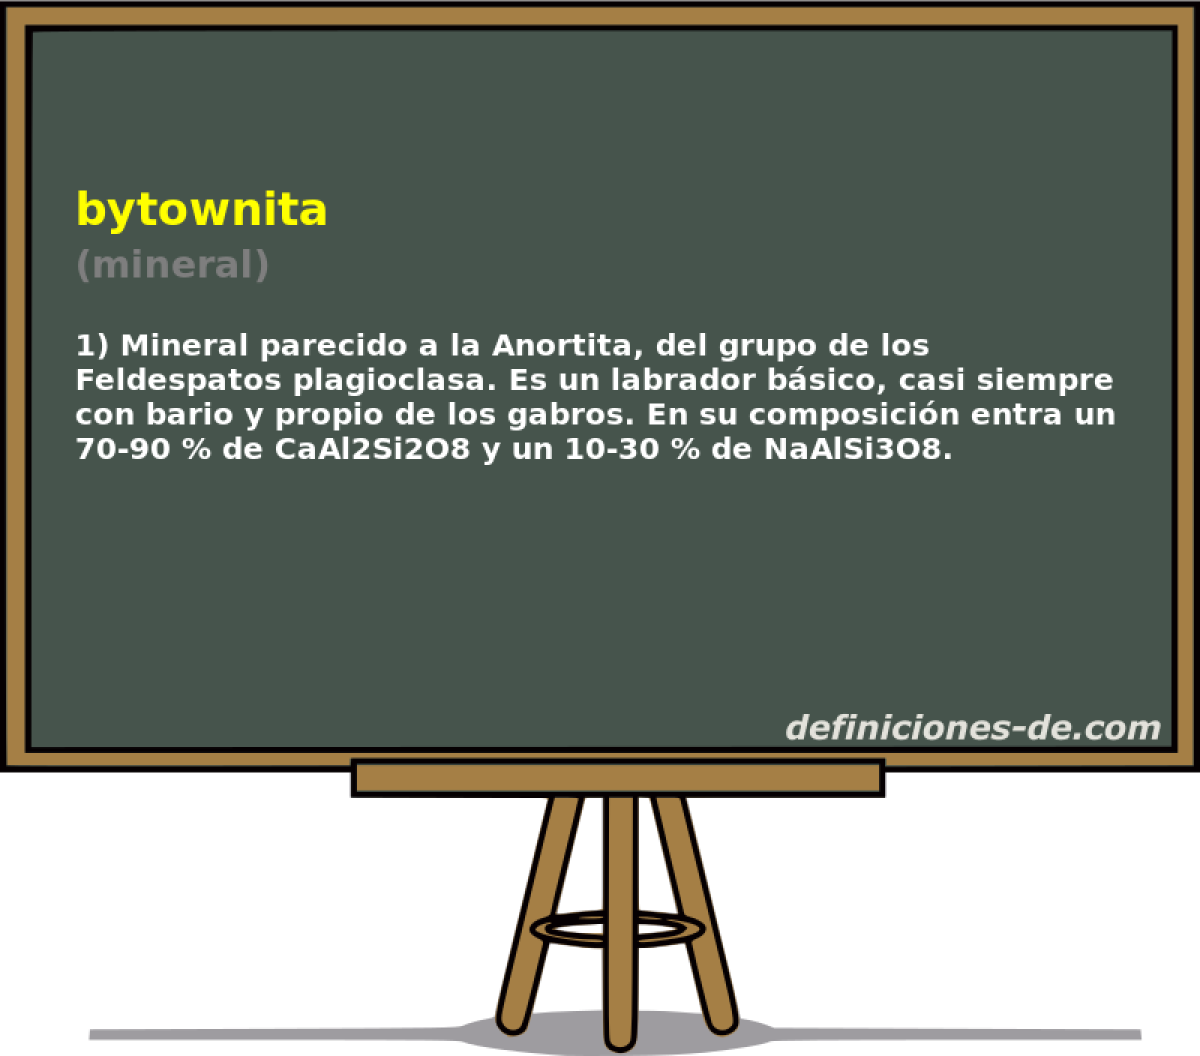 bytownita (mineral)